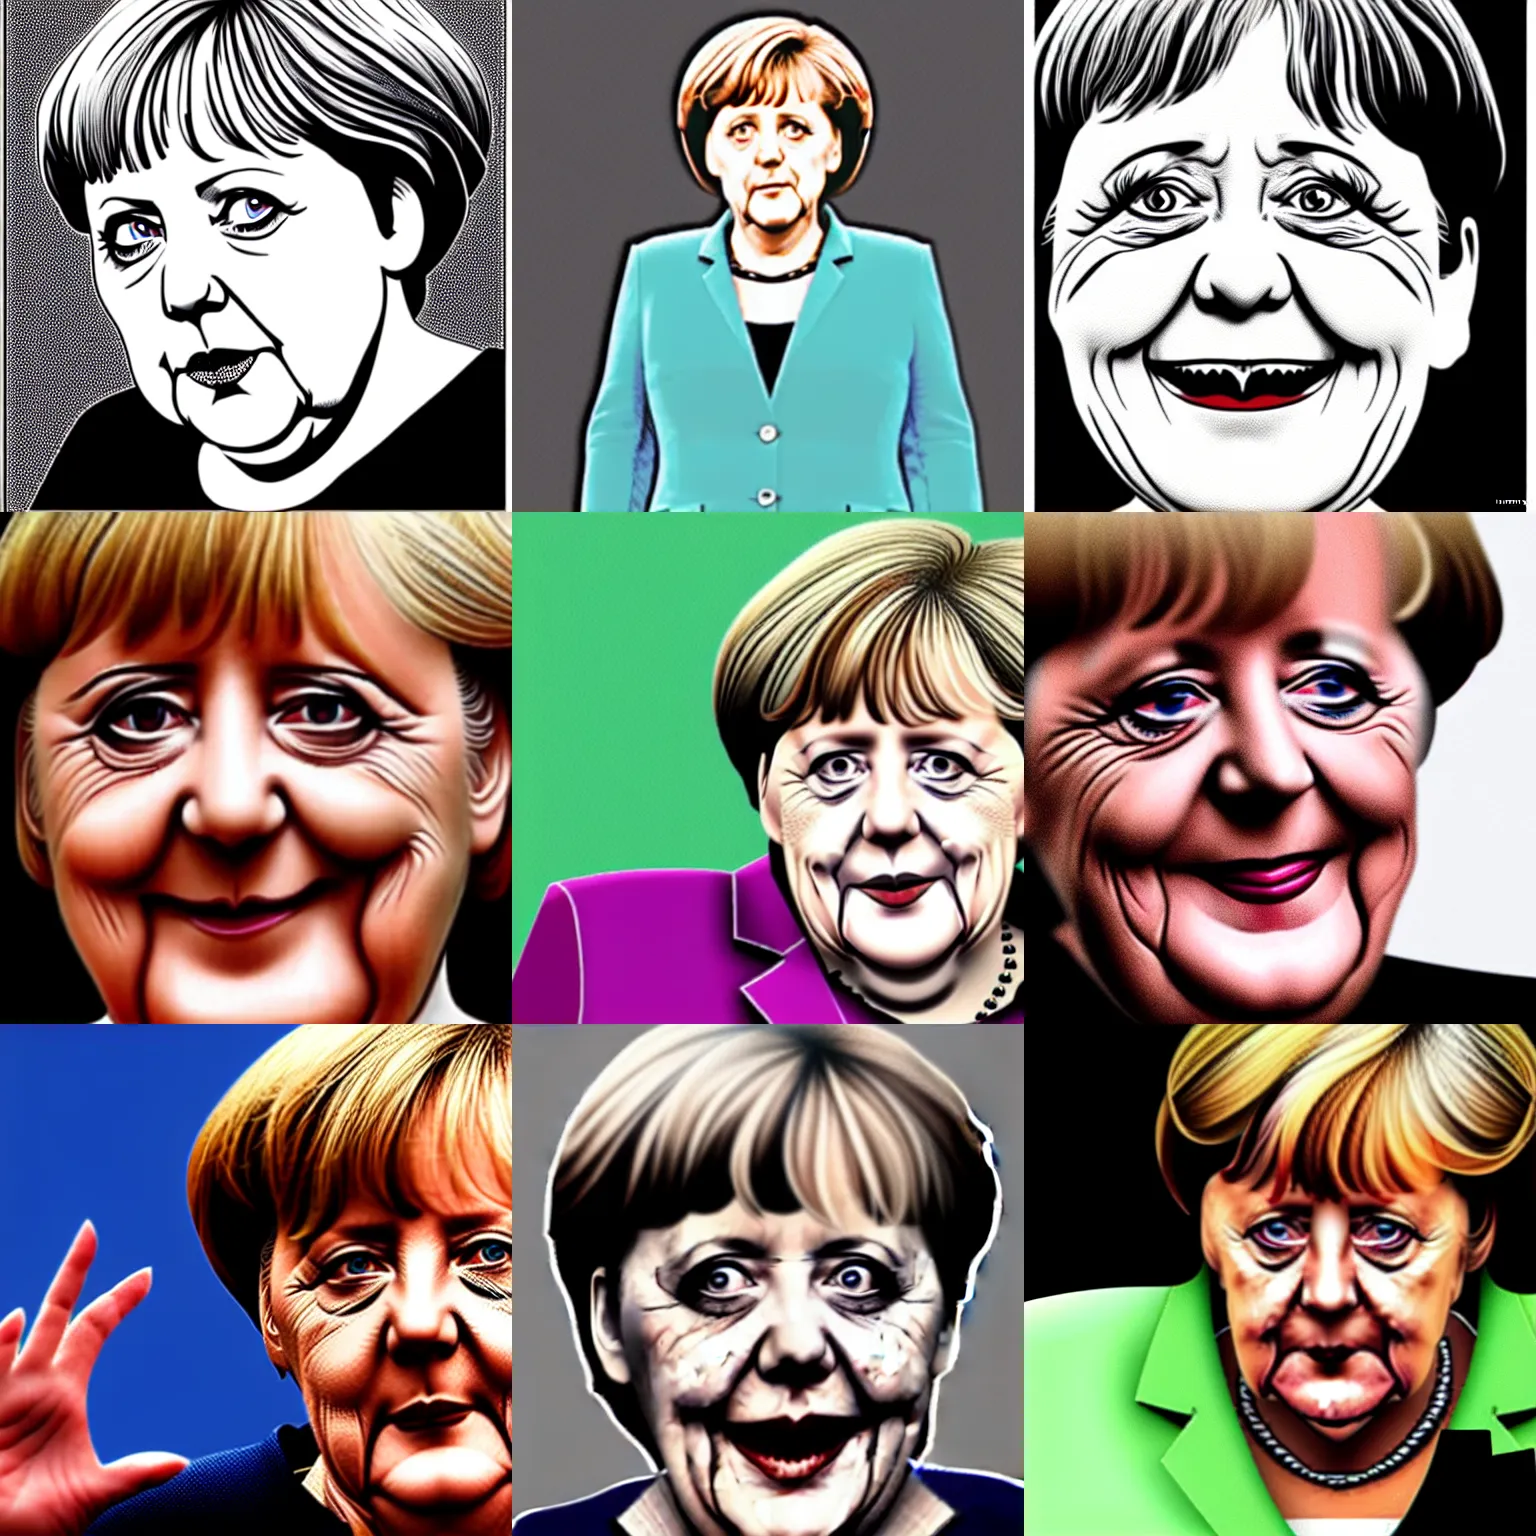 Prompt: Angela Merkel in the style of Junji Ito